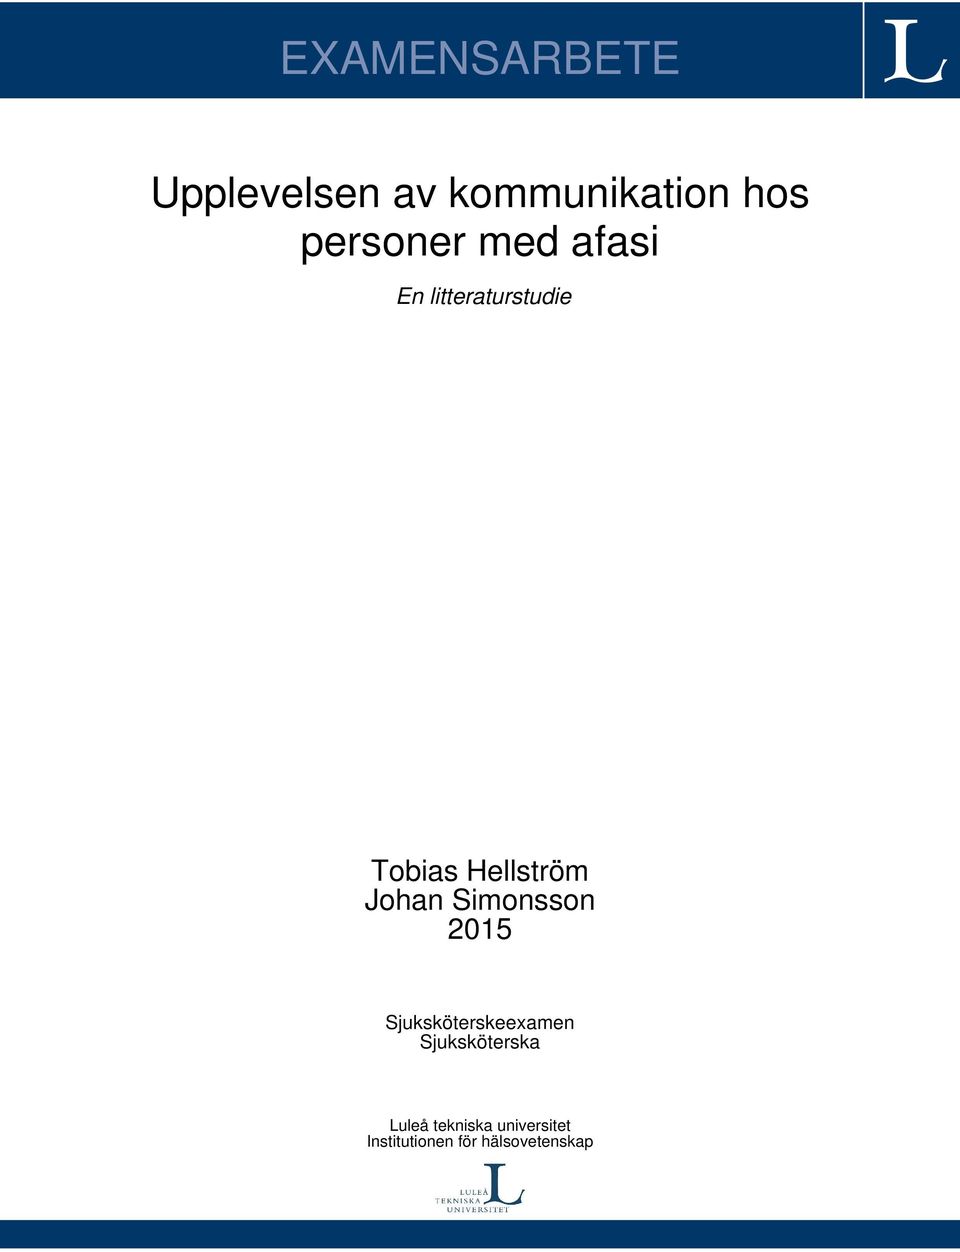 Hellström Johan Simonsson 2015 Sjuksköterskeexamen